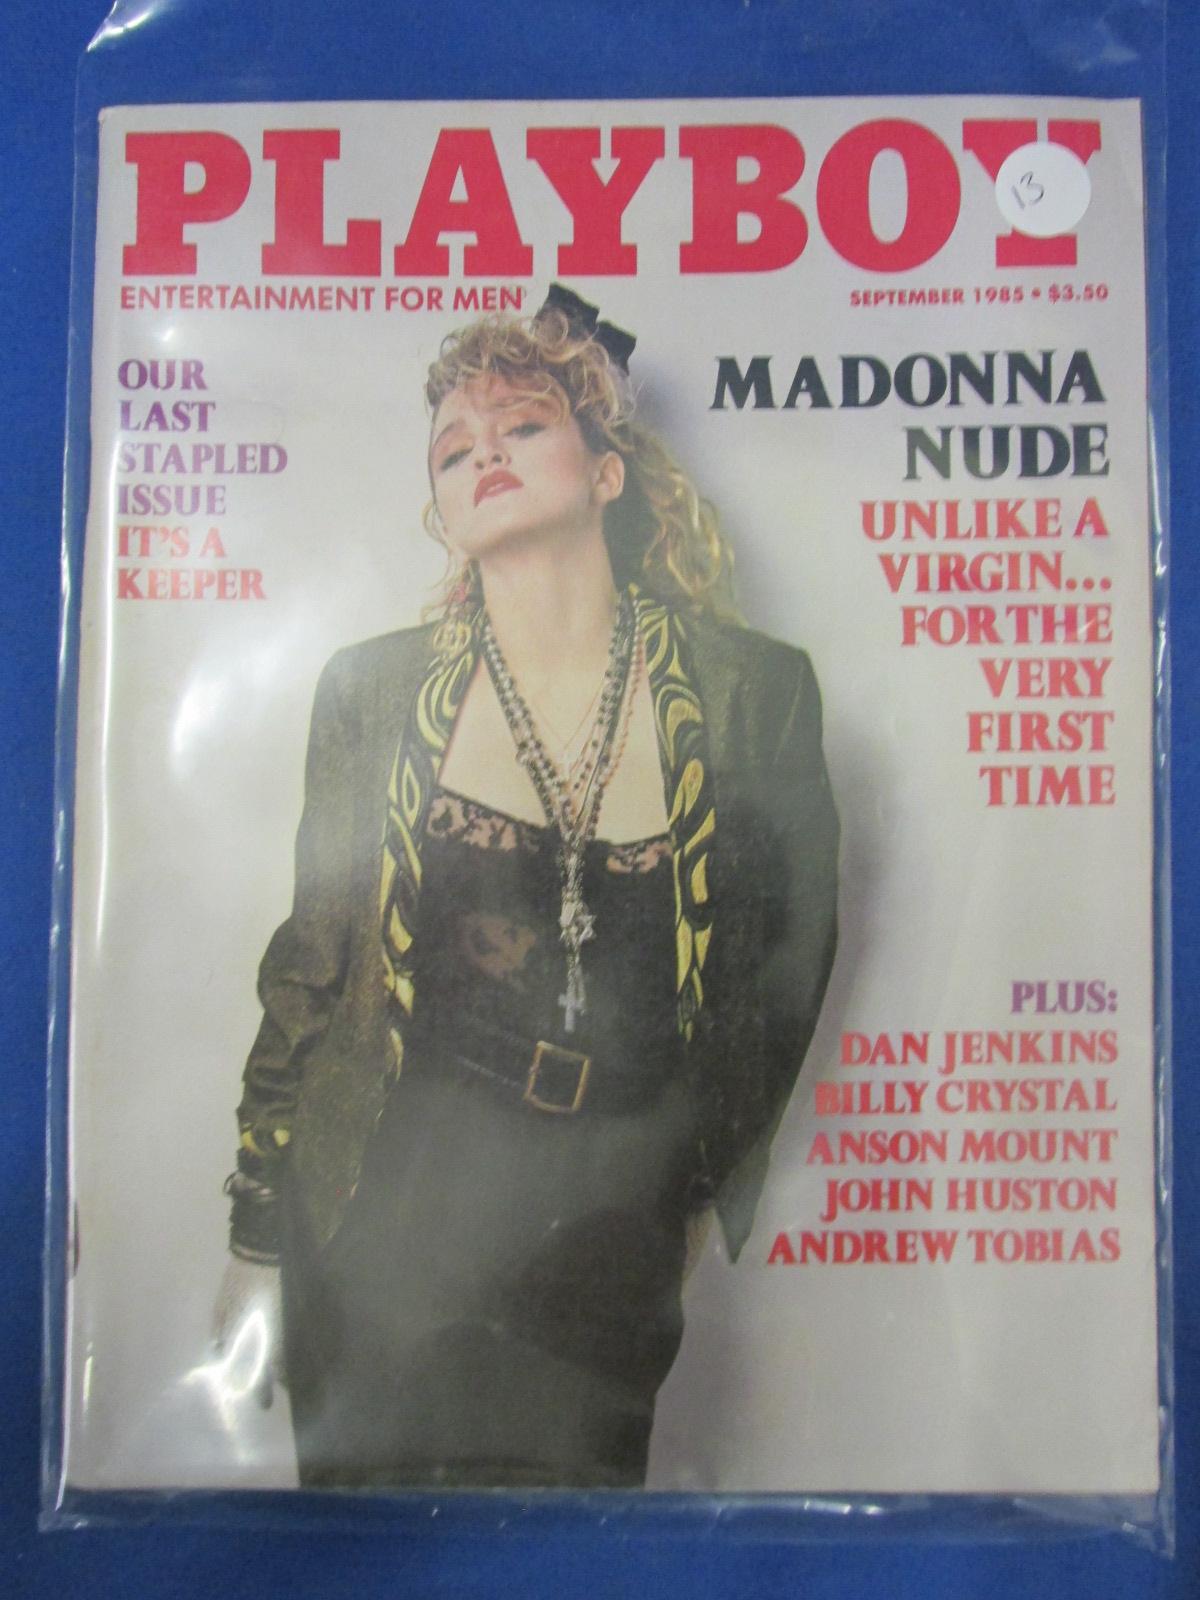 Playboy September 1985 “Madonna Nude” - Last stapled Issue